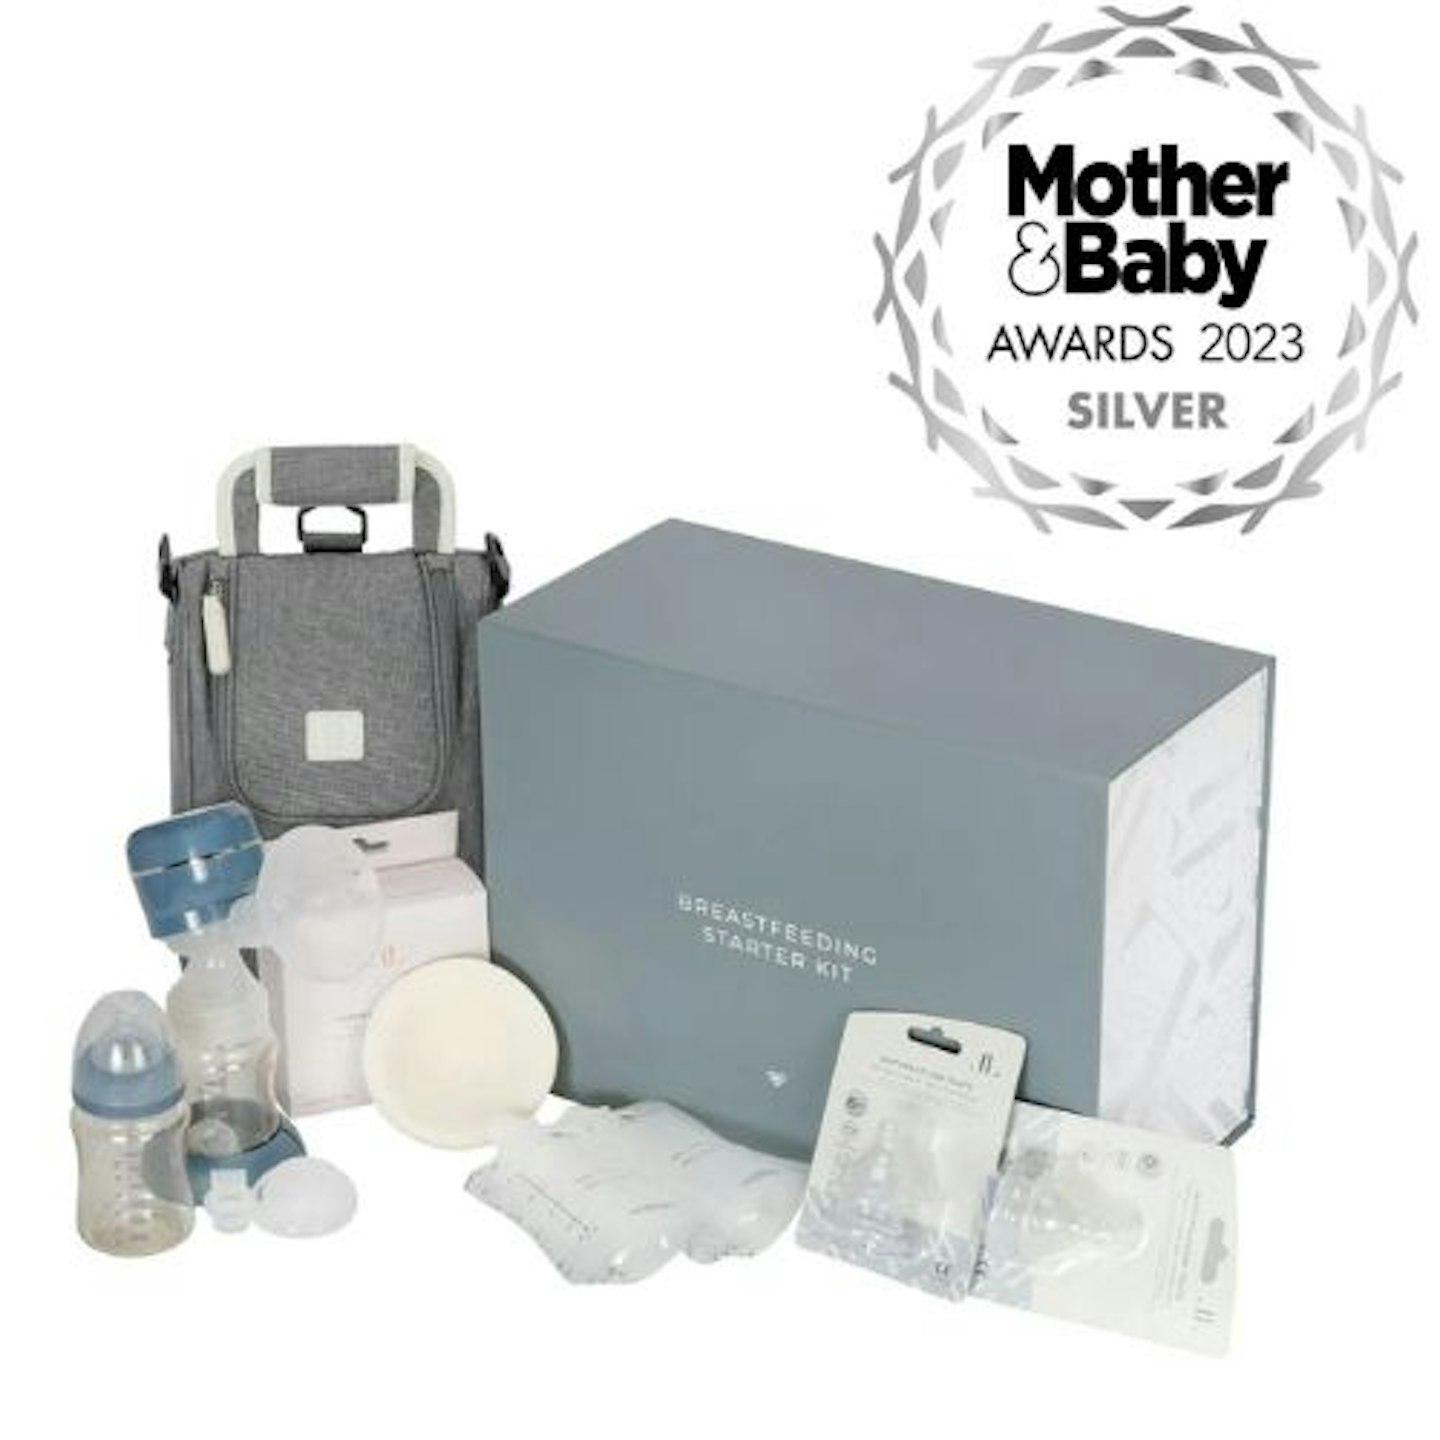 Lola & Lykke breastfeeding starter kit